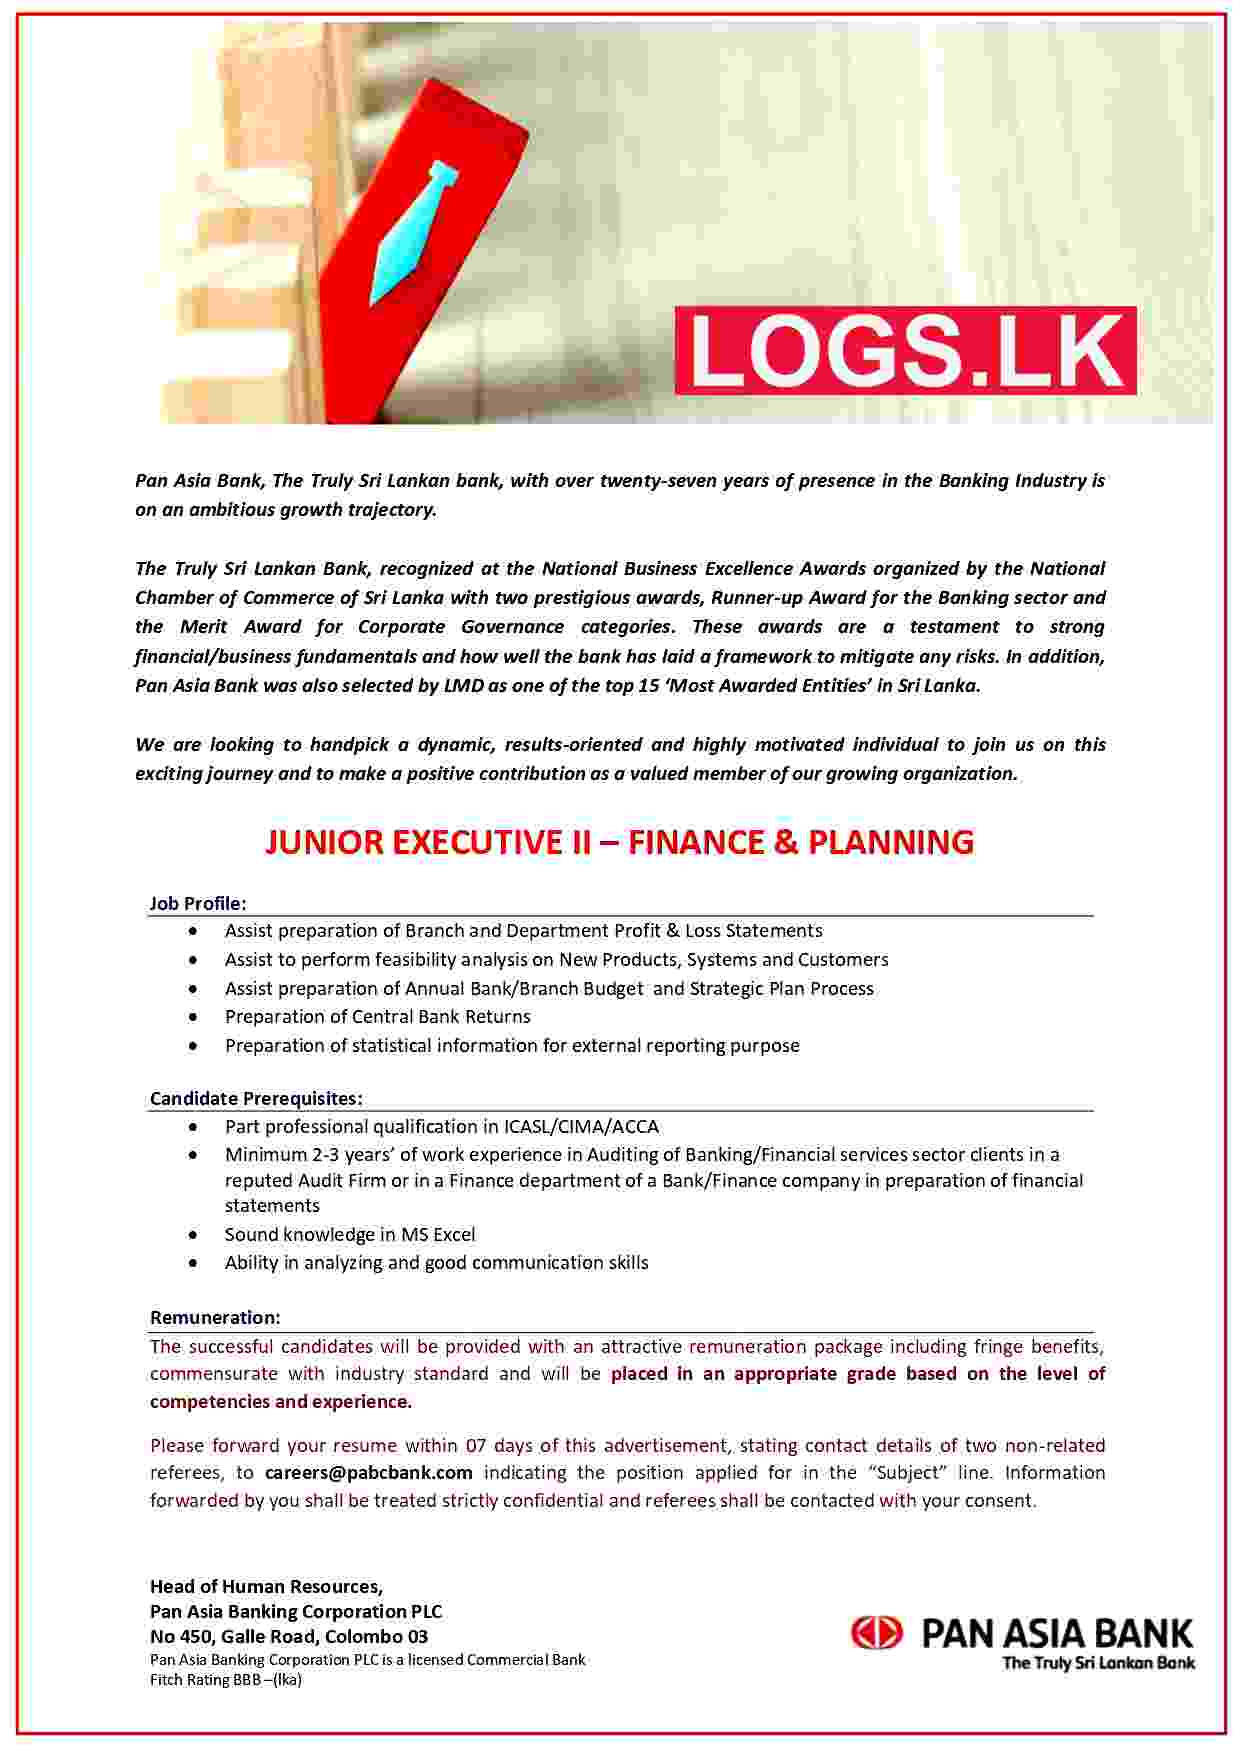 Junior Executive II - Finance and Planning - Pan Asia Bank Jobs Vacancies